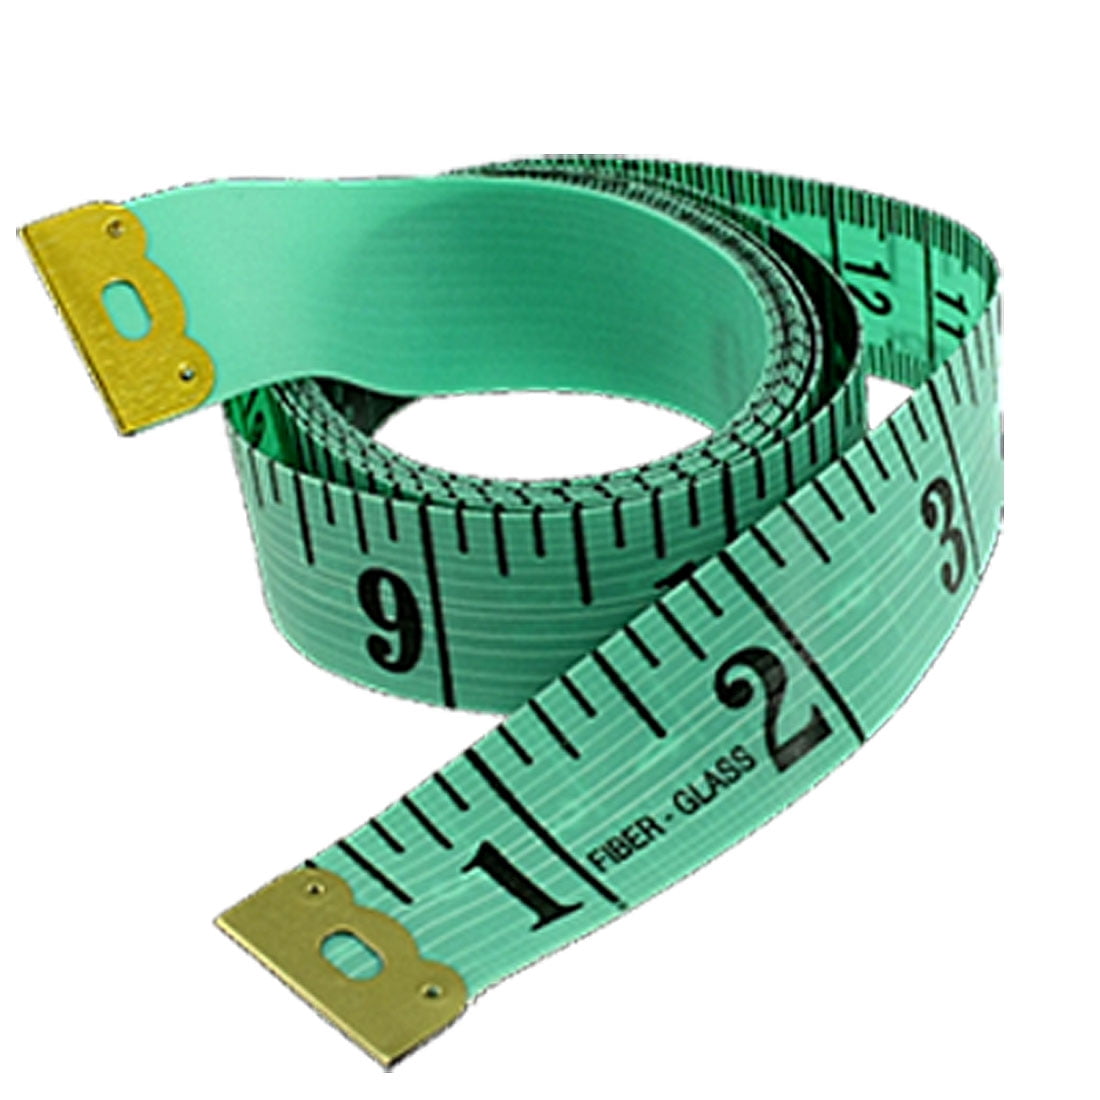 Custom design fabric measuring tape colorful cloth tape measure